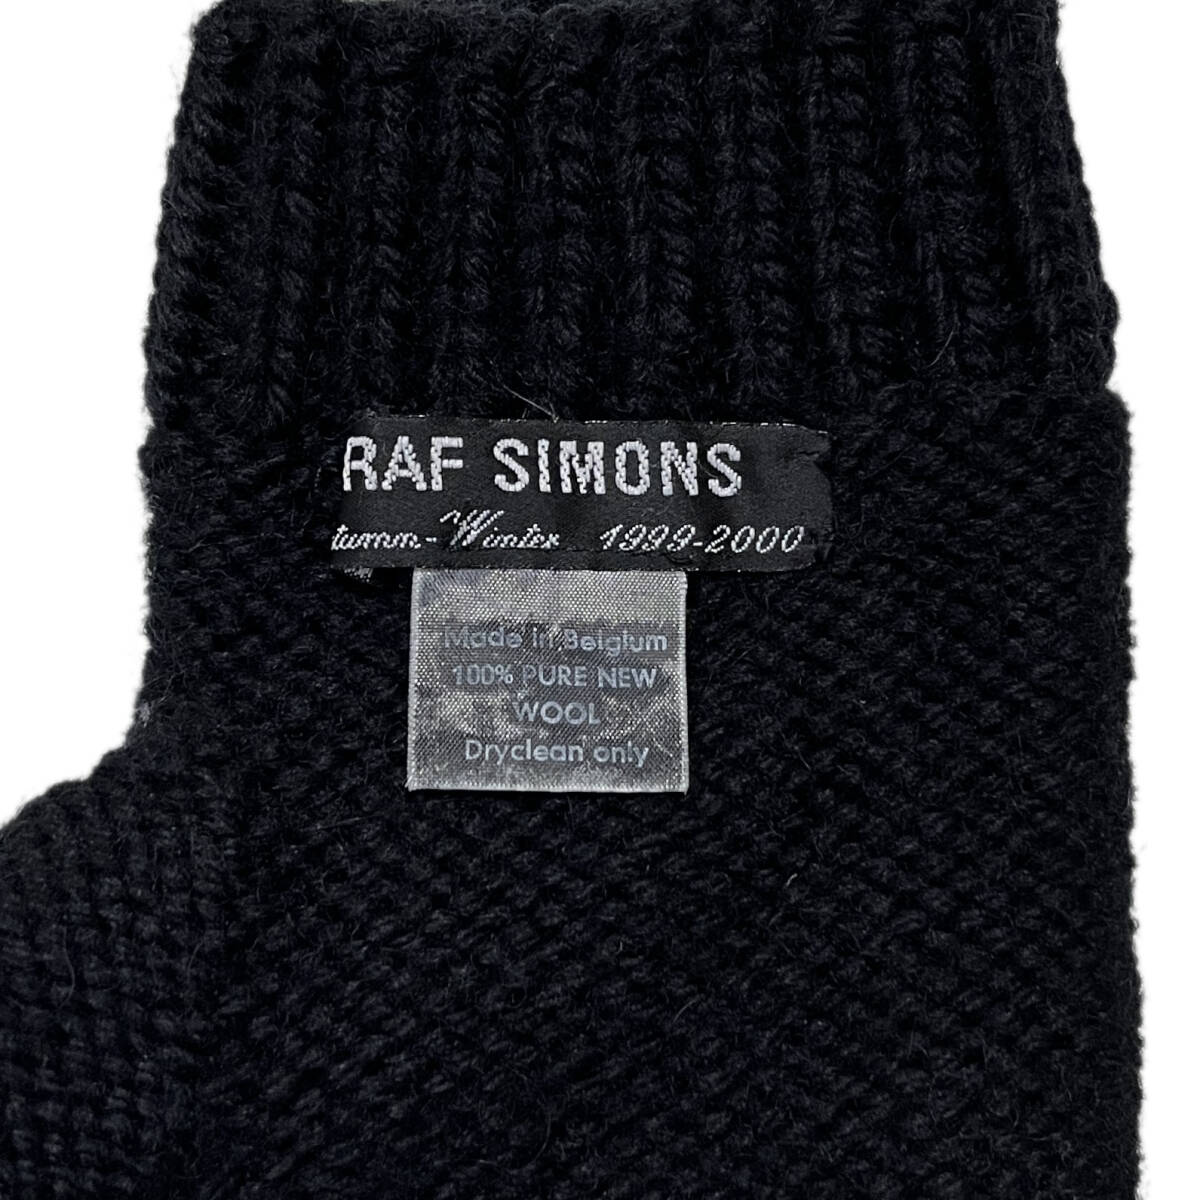 RAF SIMONS 1999-2000A/W knitted glove Raf Simons archive sweat Parker slacks Calvin Klein Jil Sander Raf by 1995